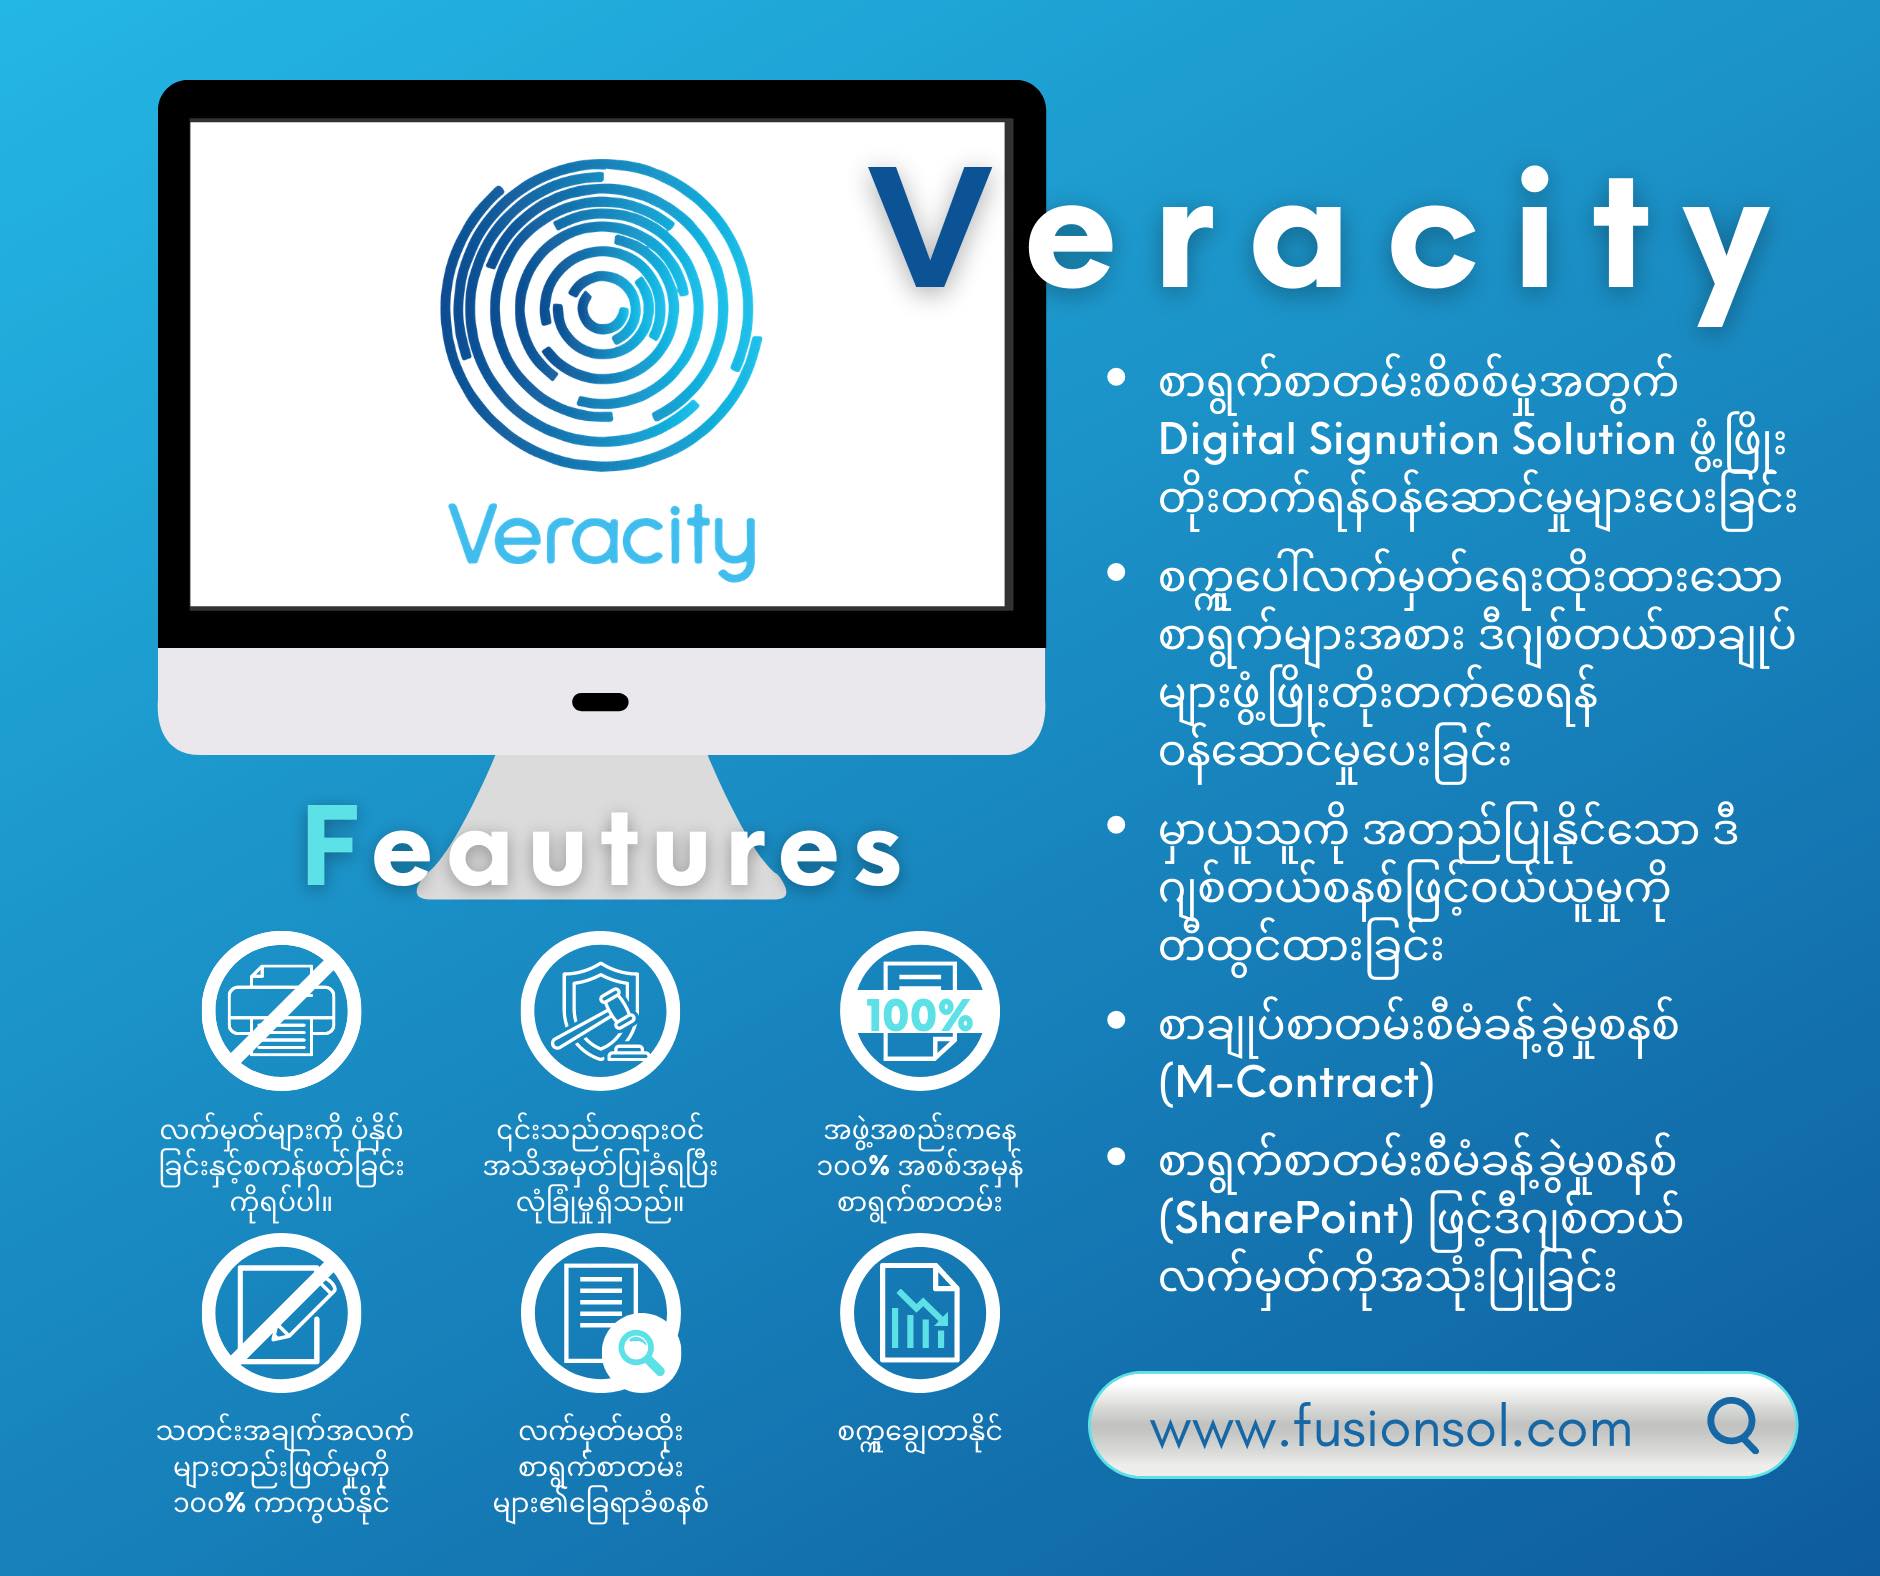 Veracity Features